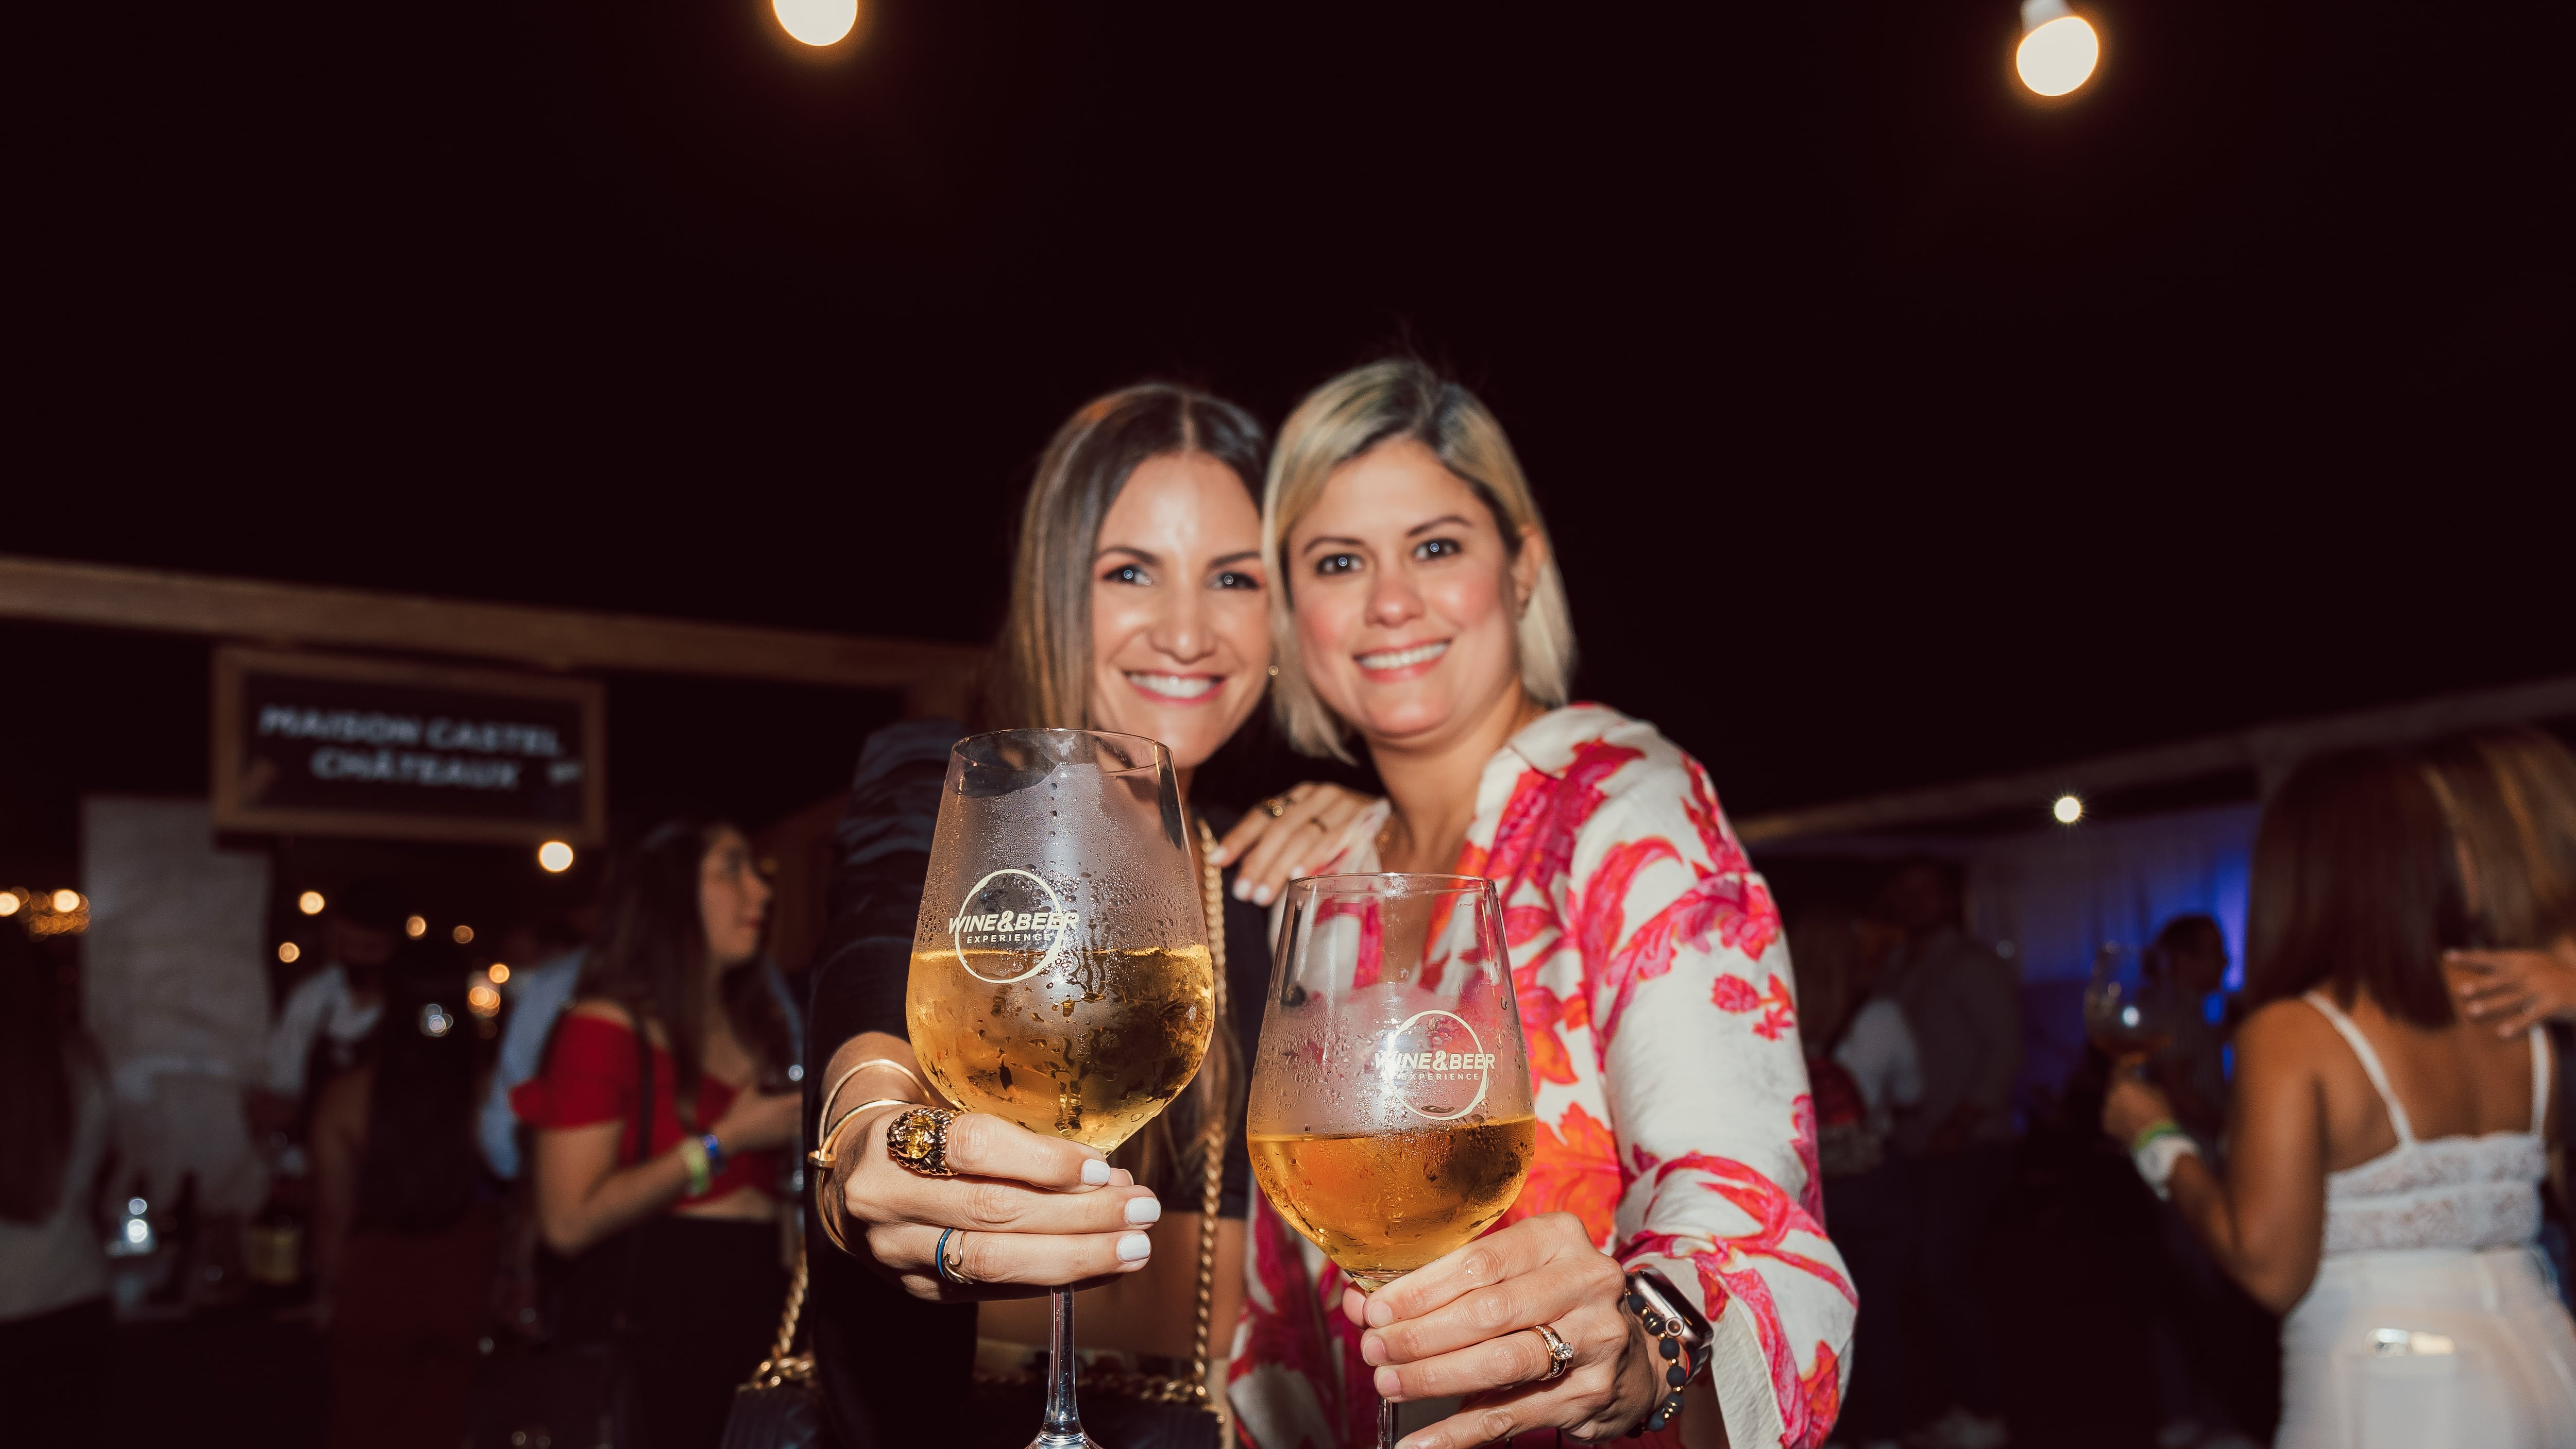 Wine & Beer Fest